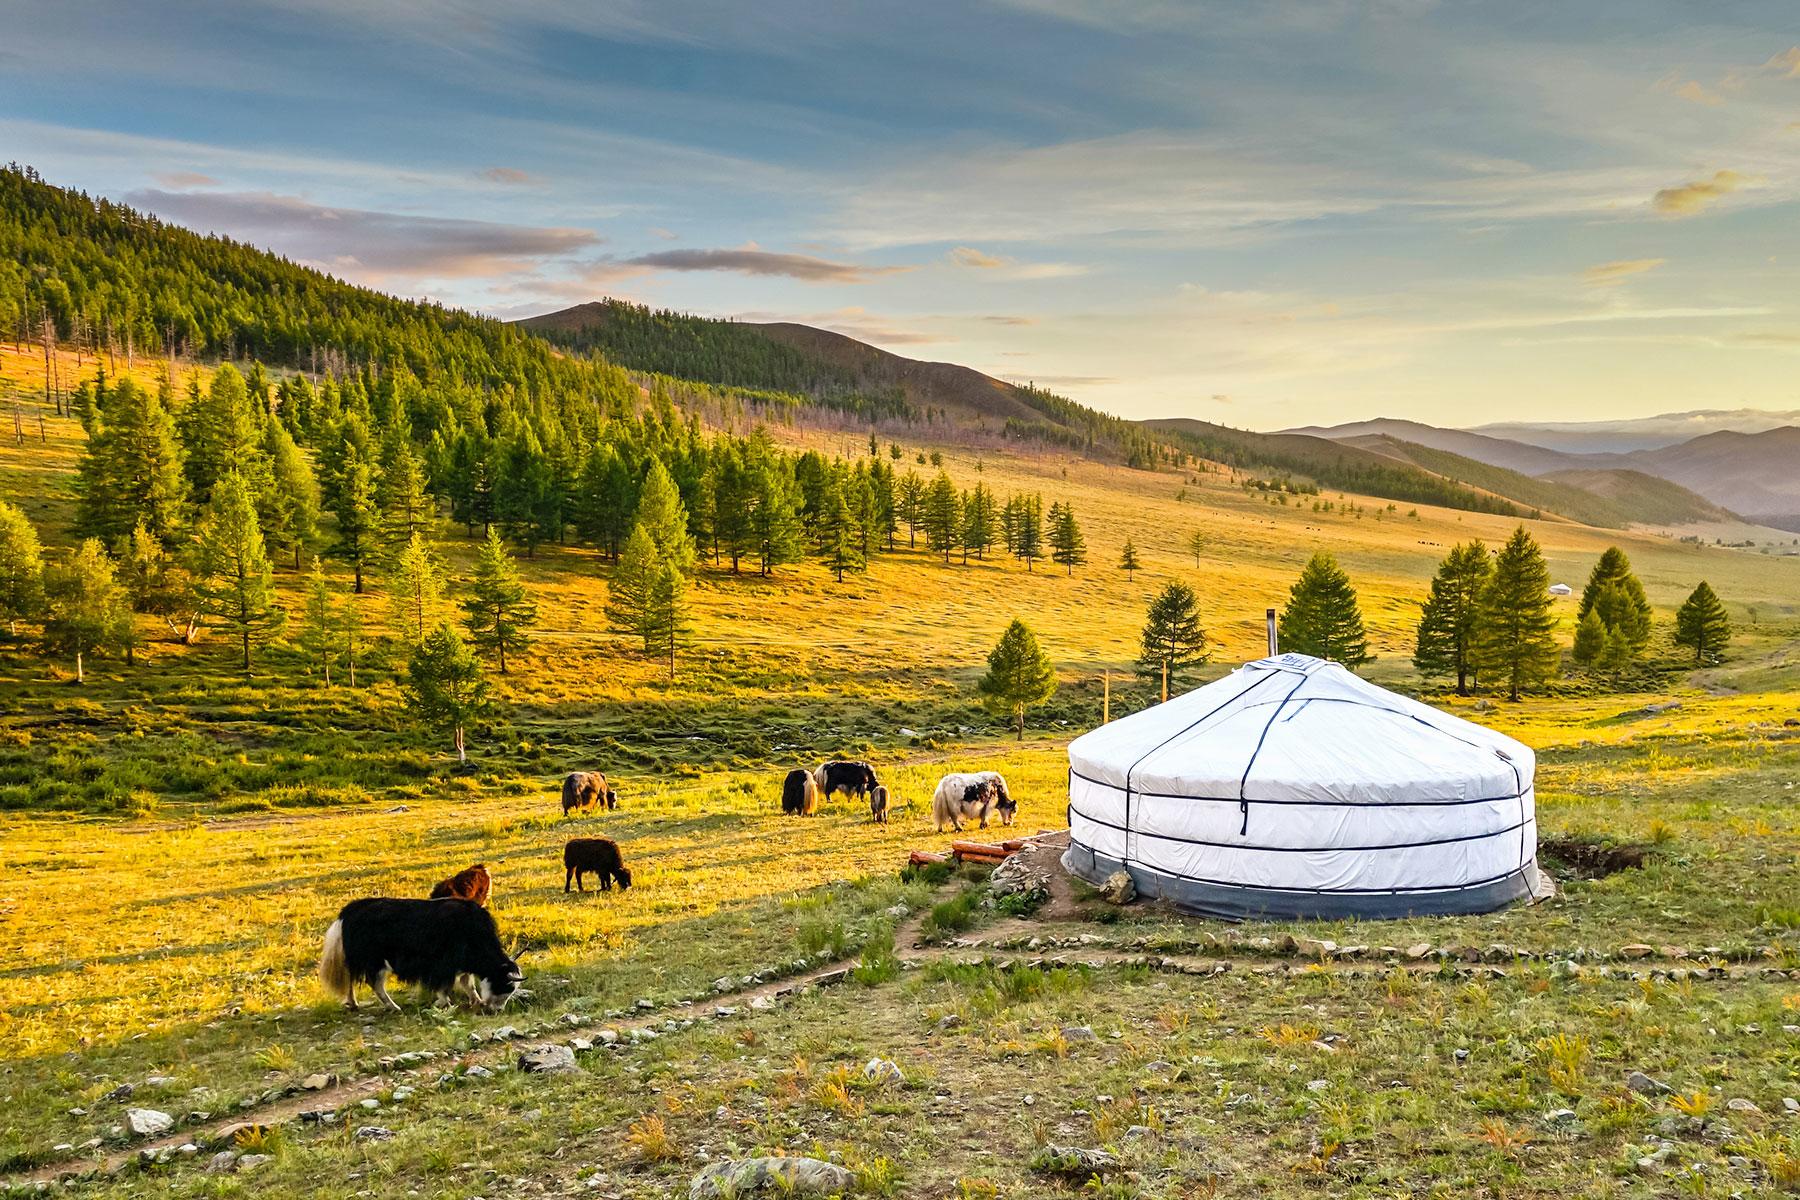 mongolia tourism official website